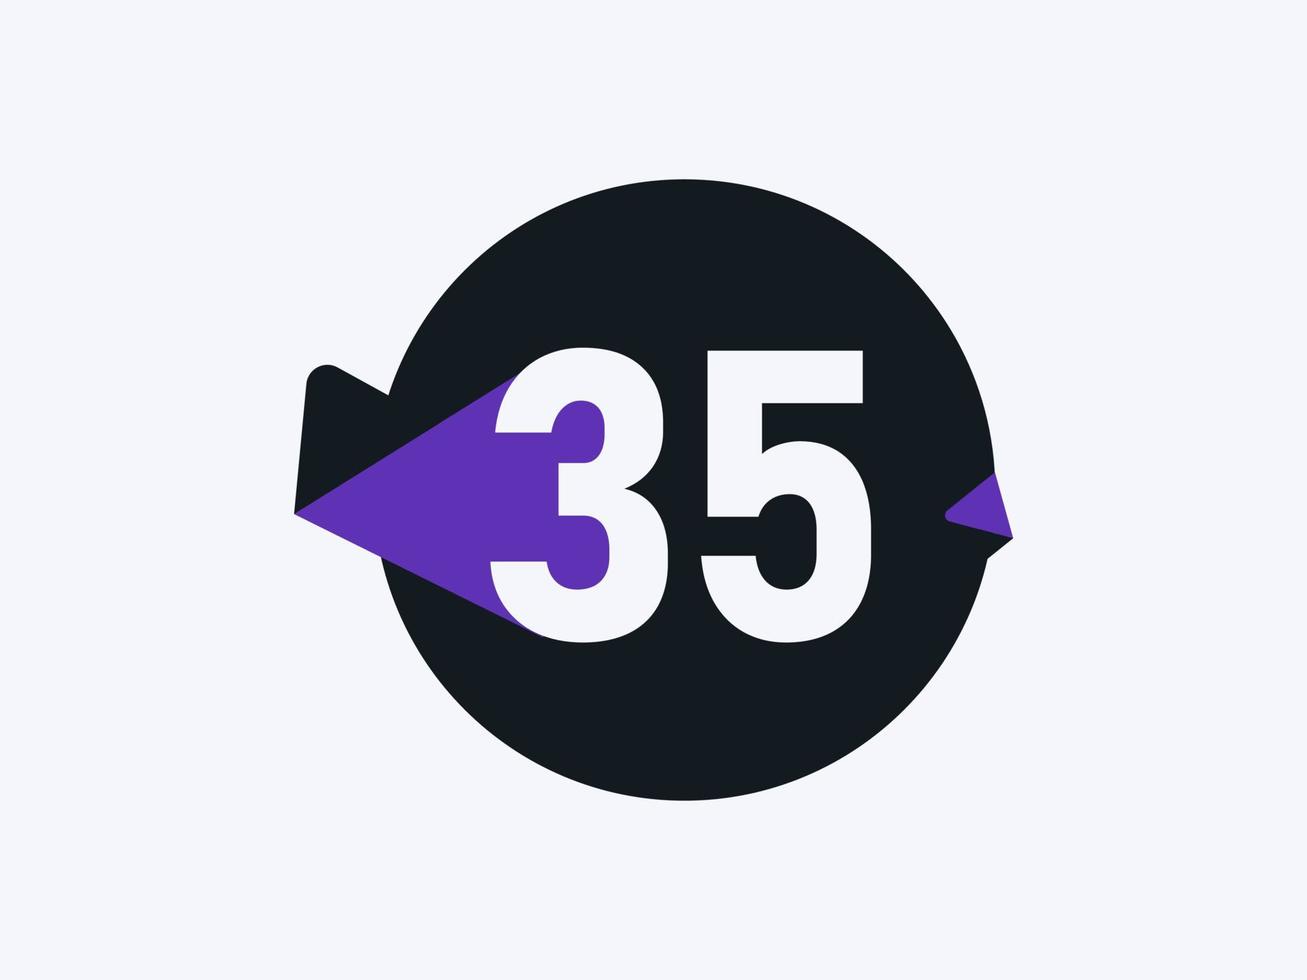 35 Number logo icon design vector image. Number logo icon design vector image